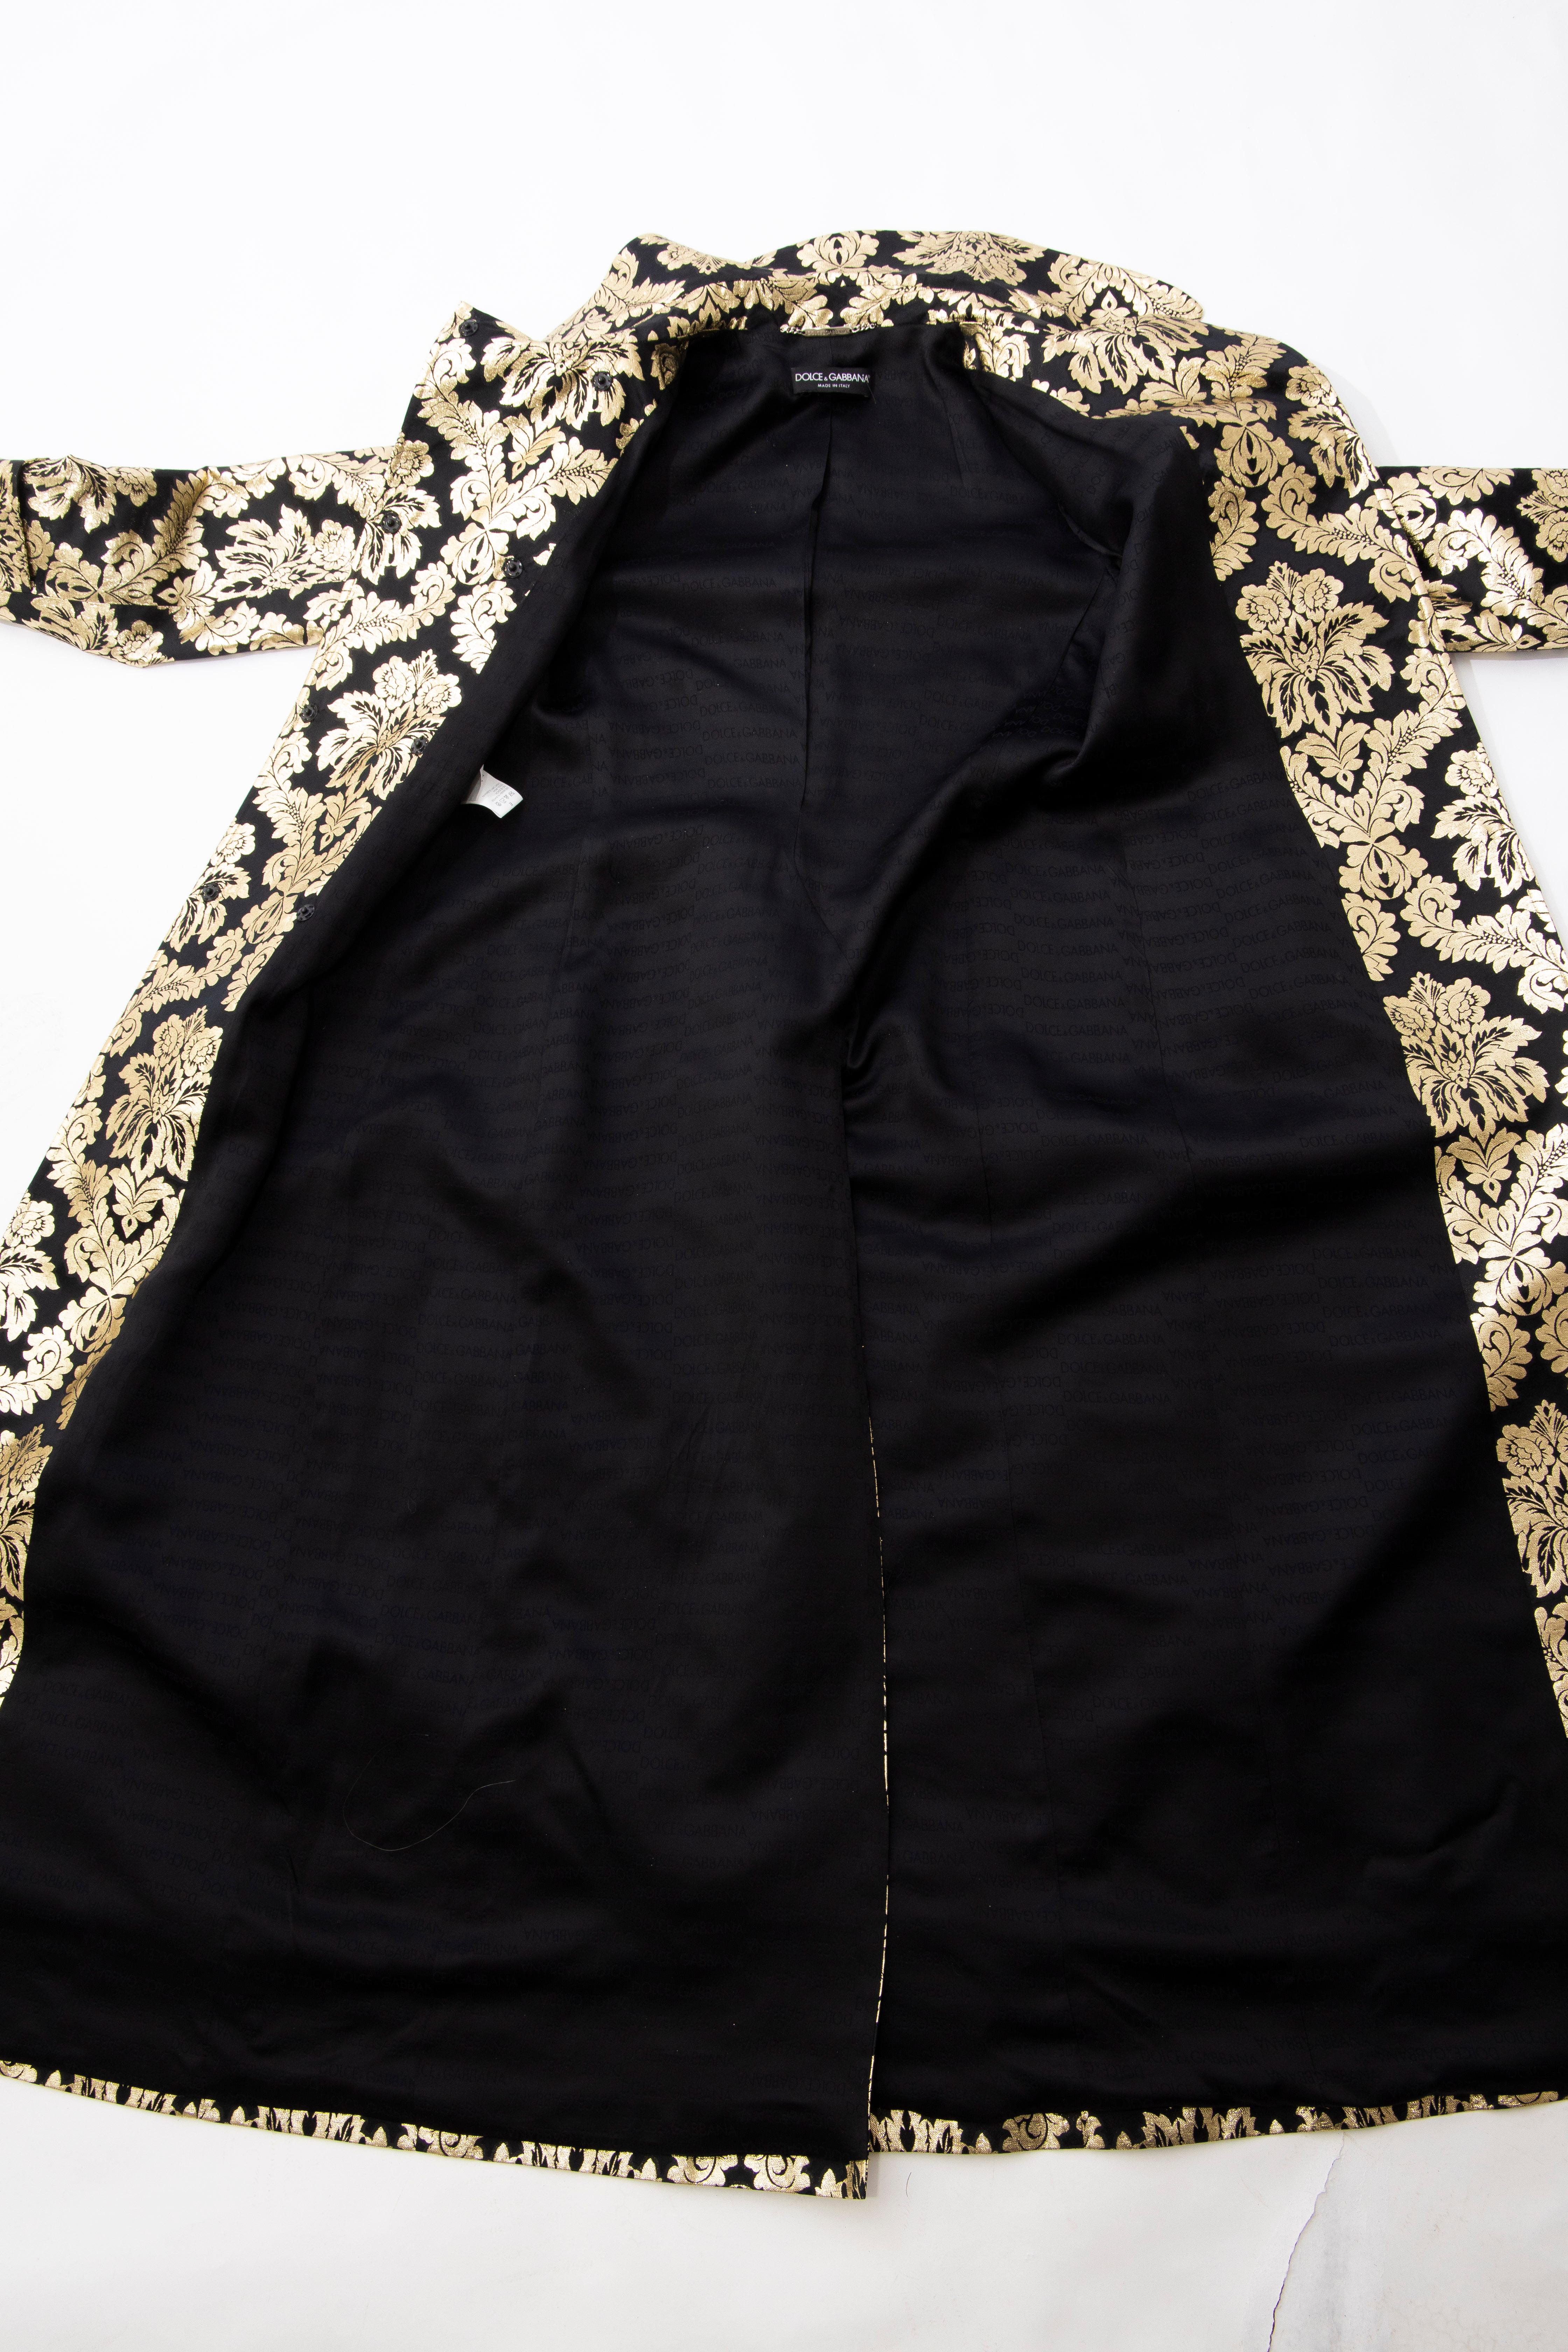 Dolce & Gabbana Runway Black Silk Gold Floral Brocade Evening Coat, Fall 2000 For Sale 14